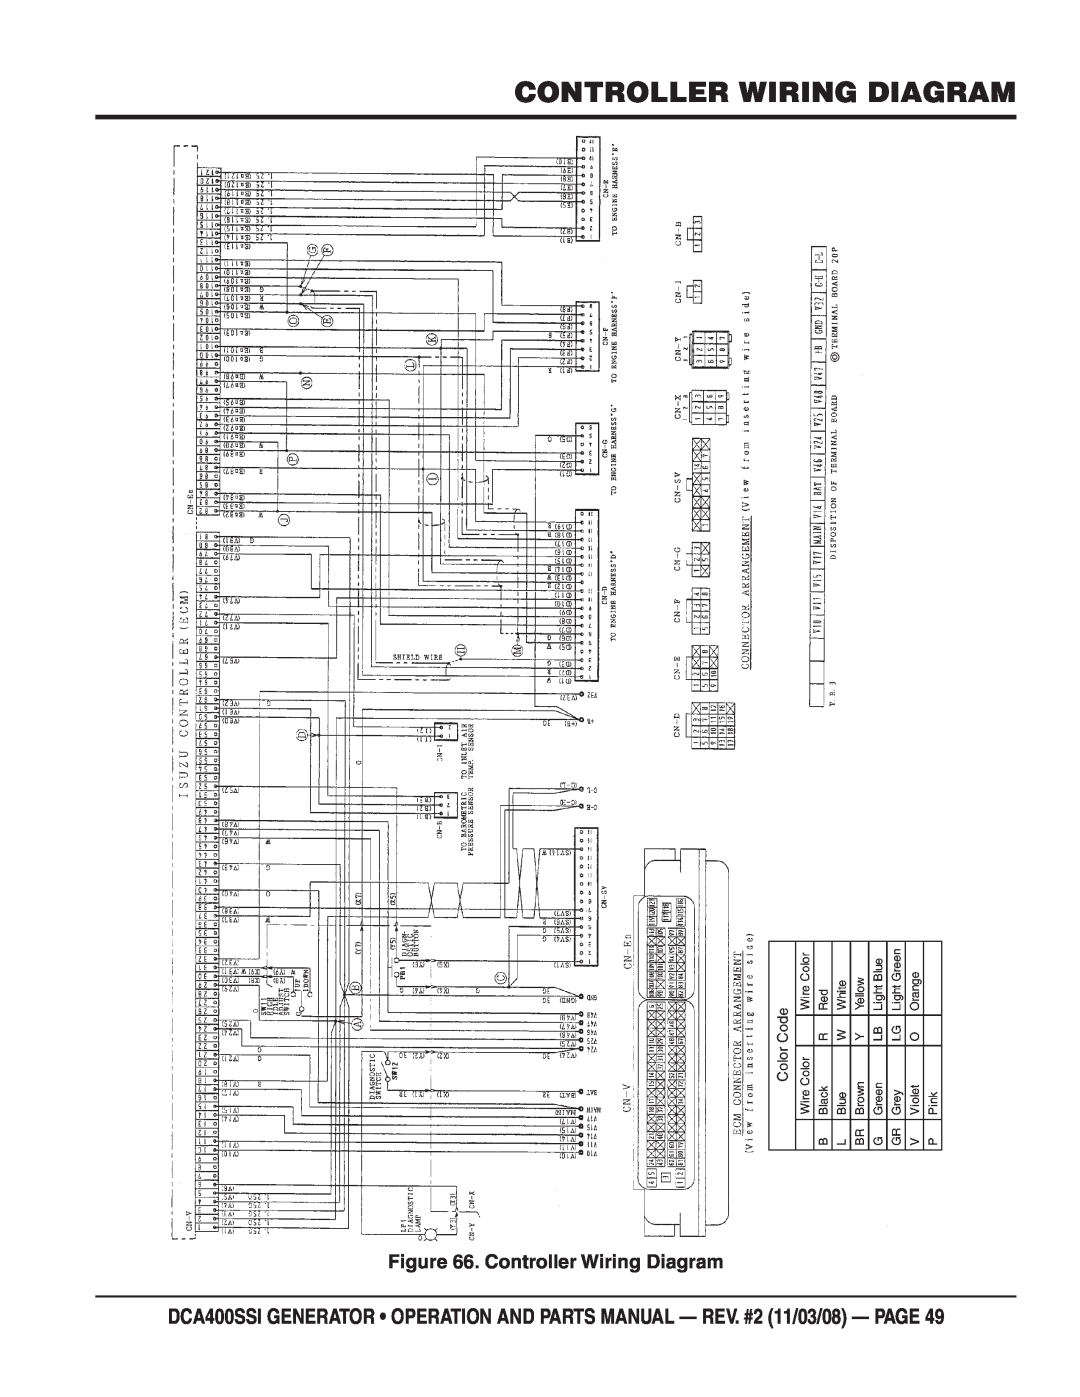 Multiquip DCA400SSI manual Controller Wiring Diagram 